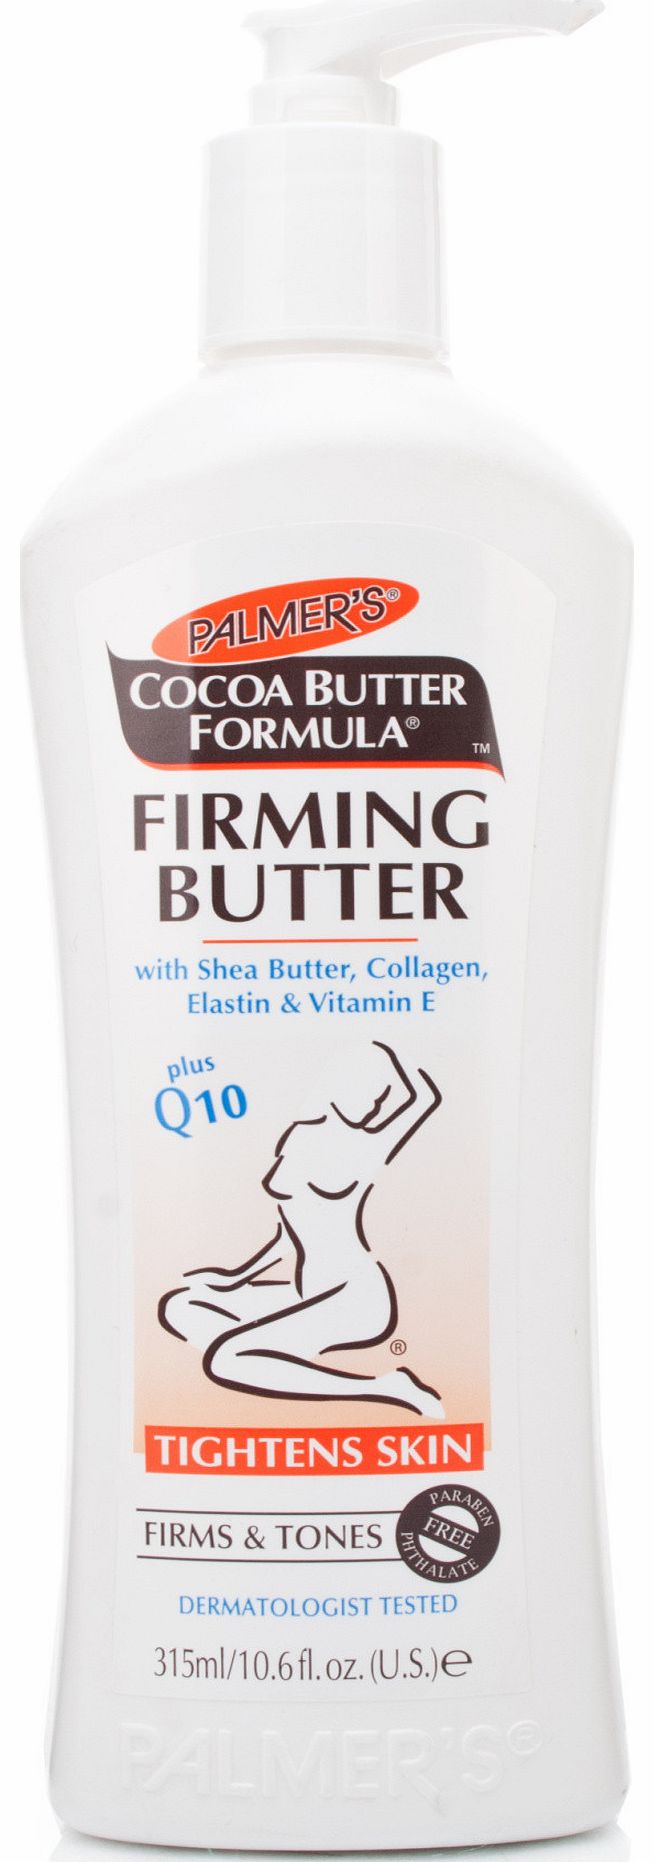 Palmers Firming Butter